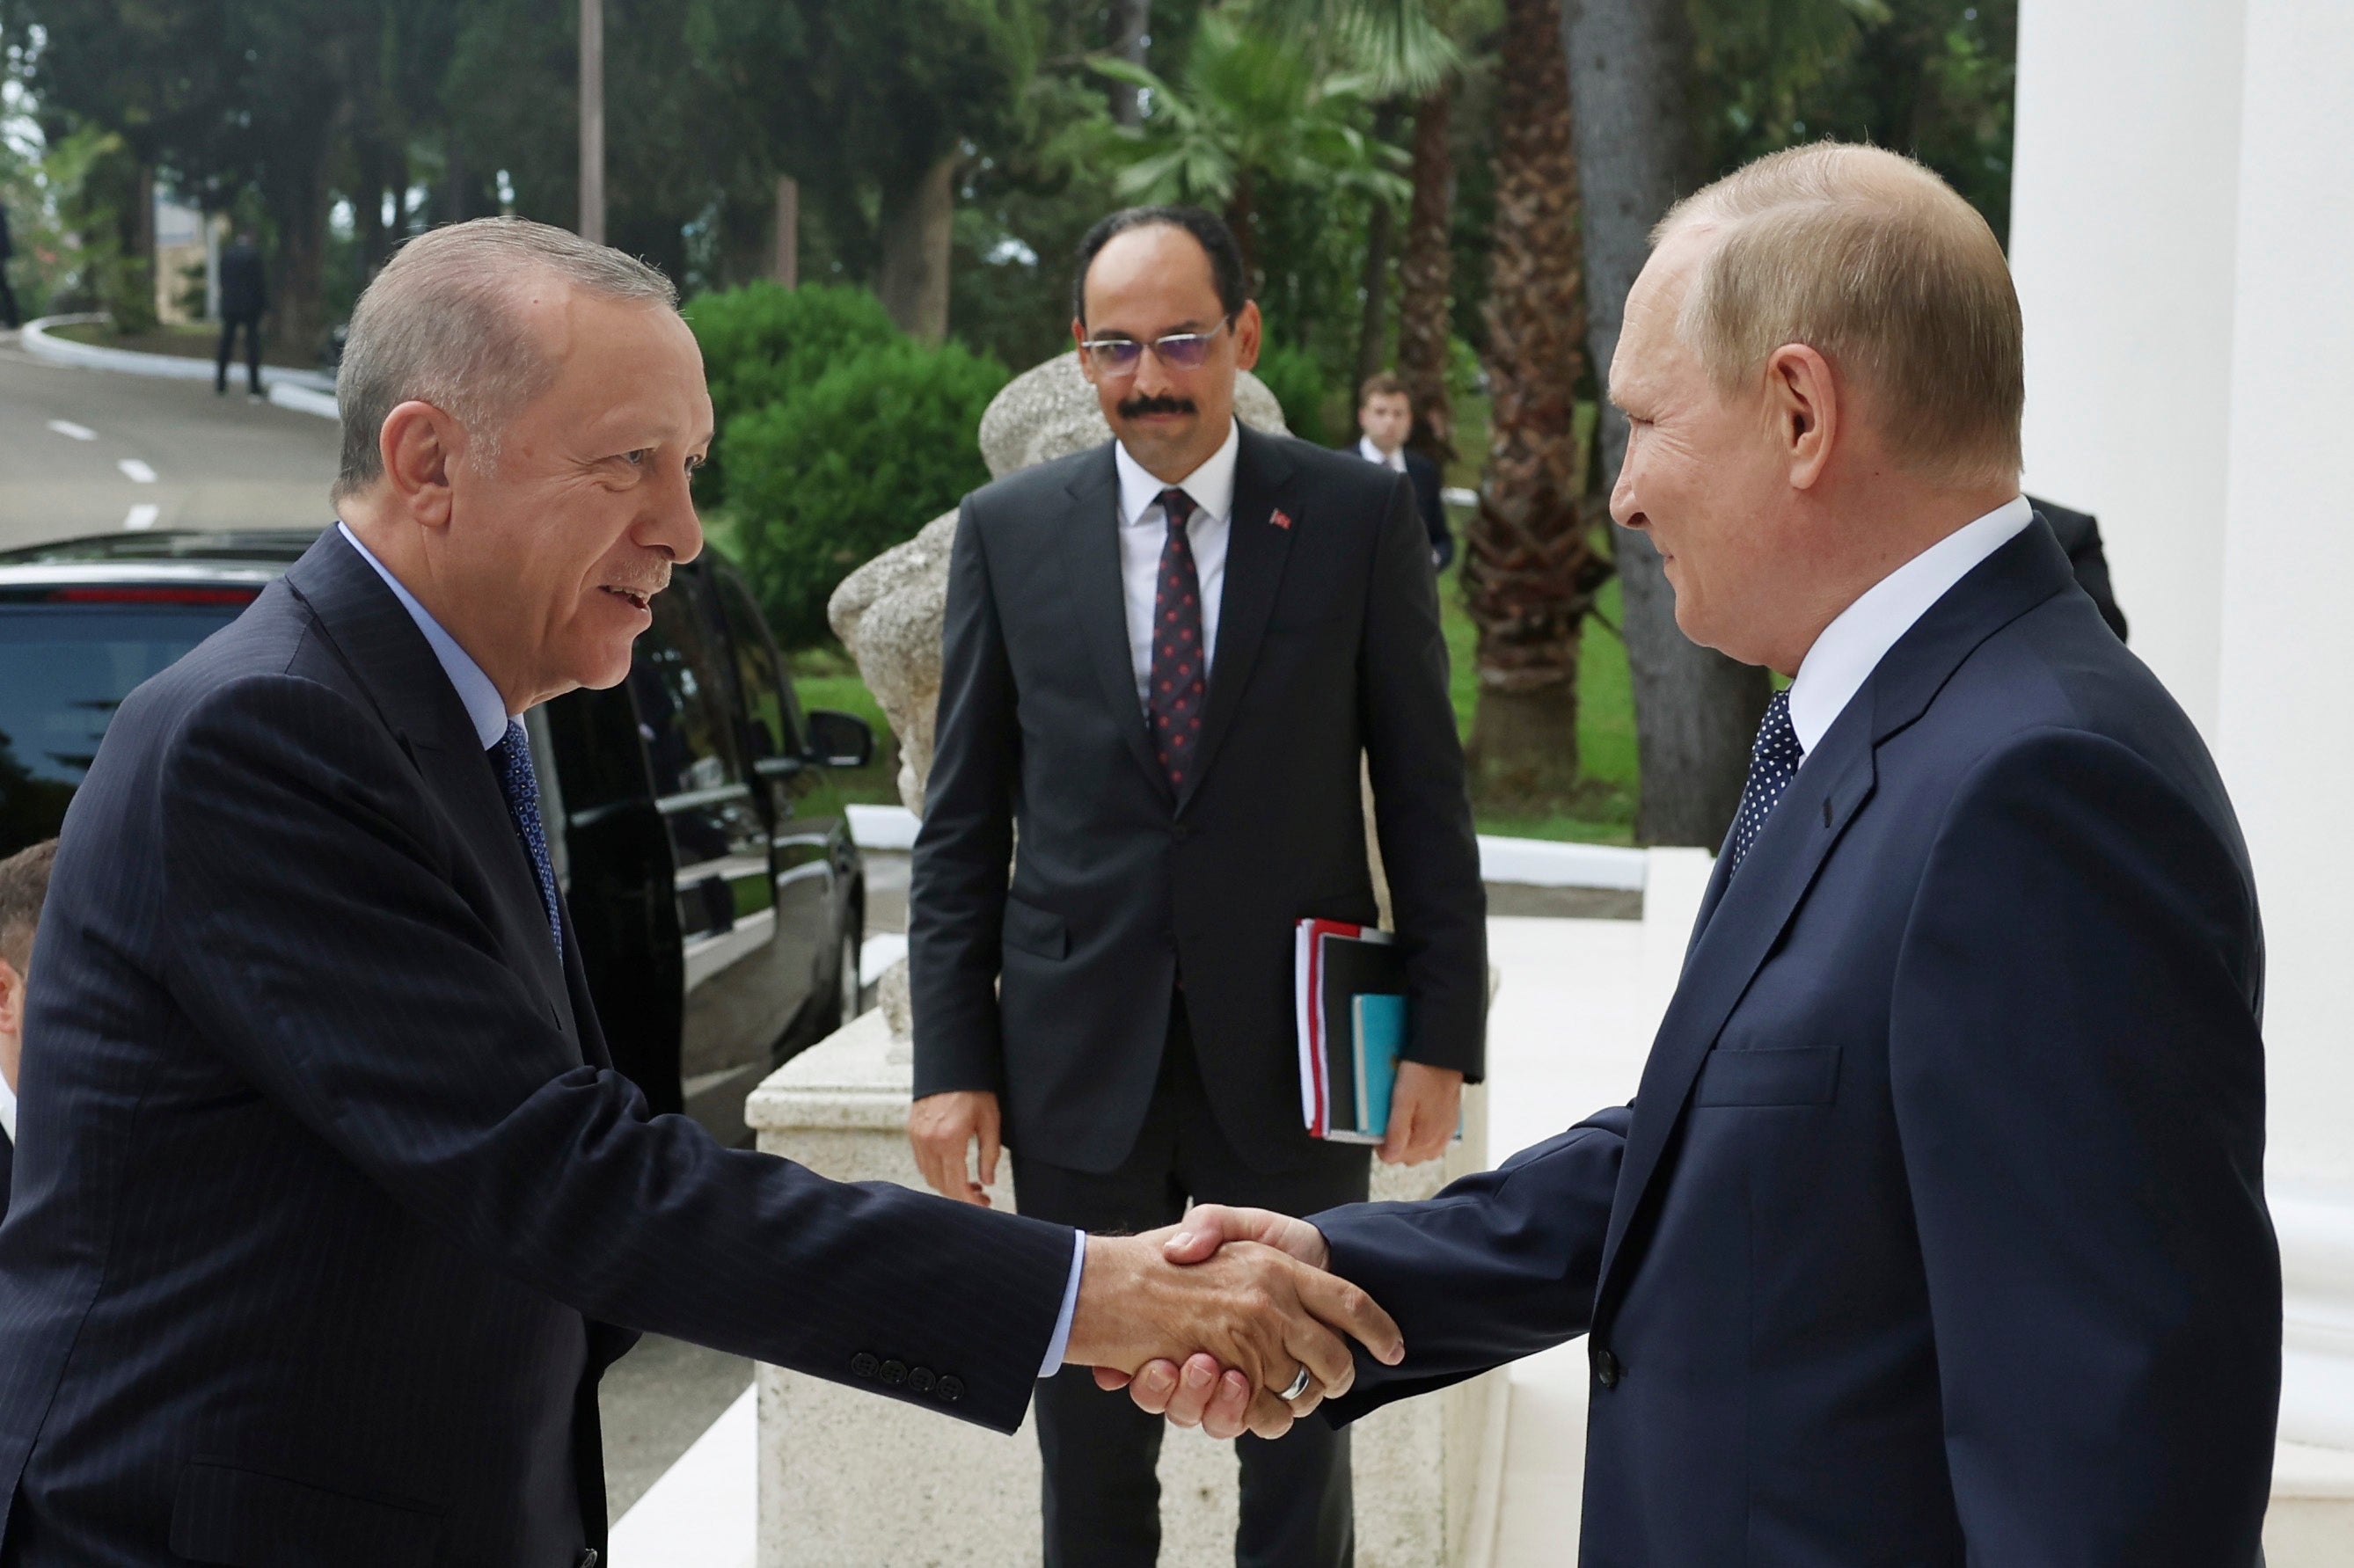 Putin and and Erdogan meet